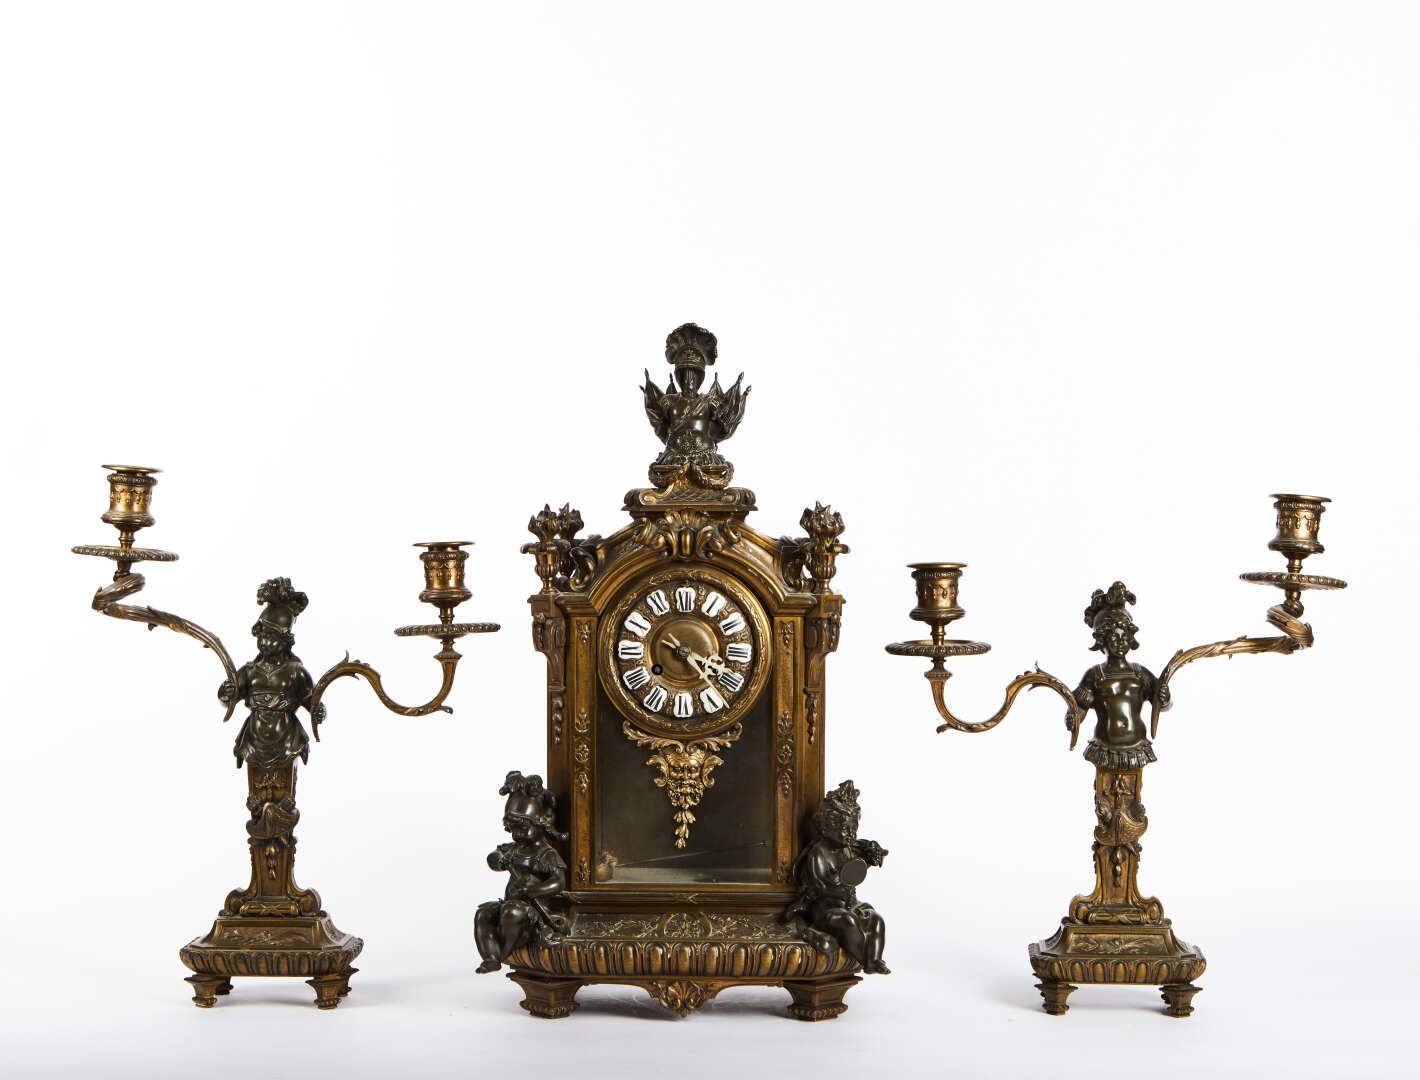 Null 鎏金青铜和斑驳青铜壁炉，包括一个时钟和一对双灯烛台

签署了Lemerle-Charpentier机芯的巴黎青铜制造商

约1880年

高度：40厘&hellip;